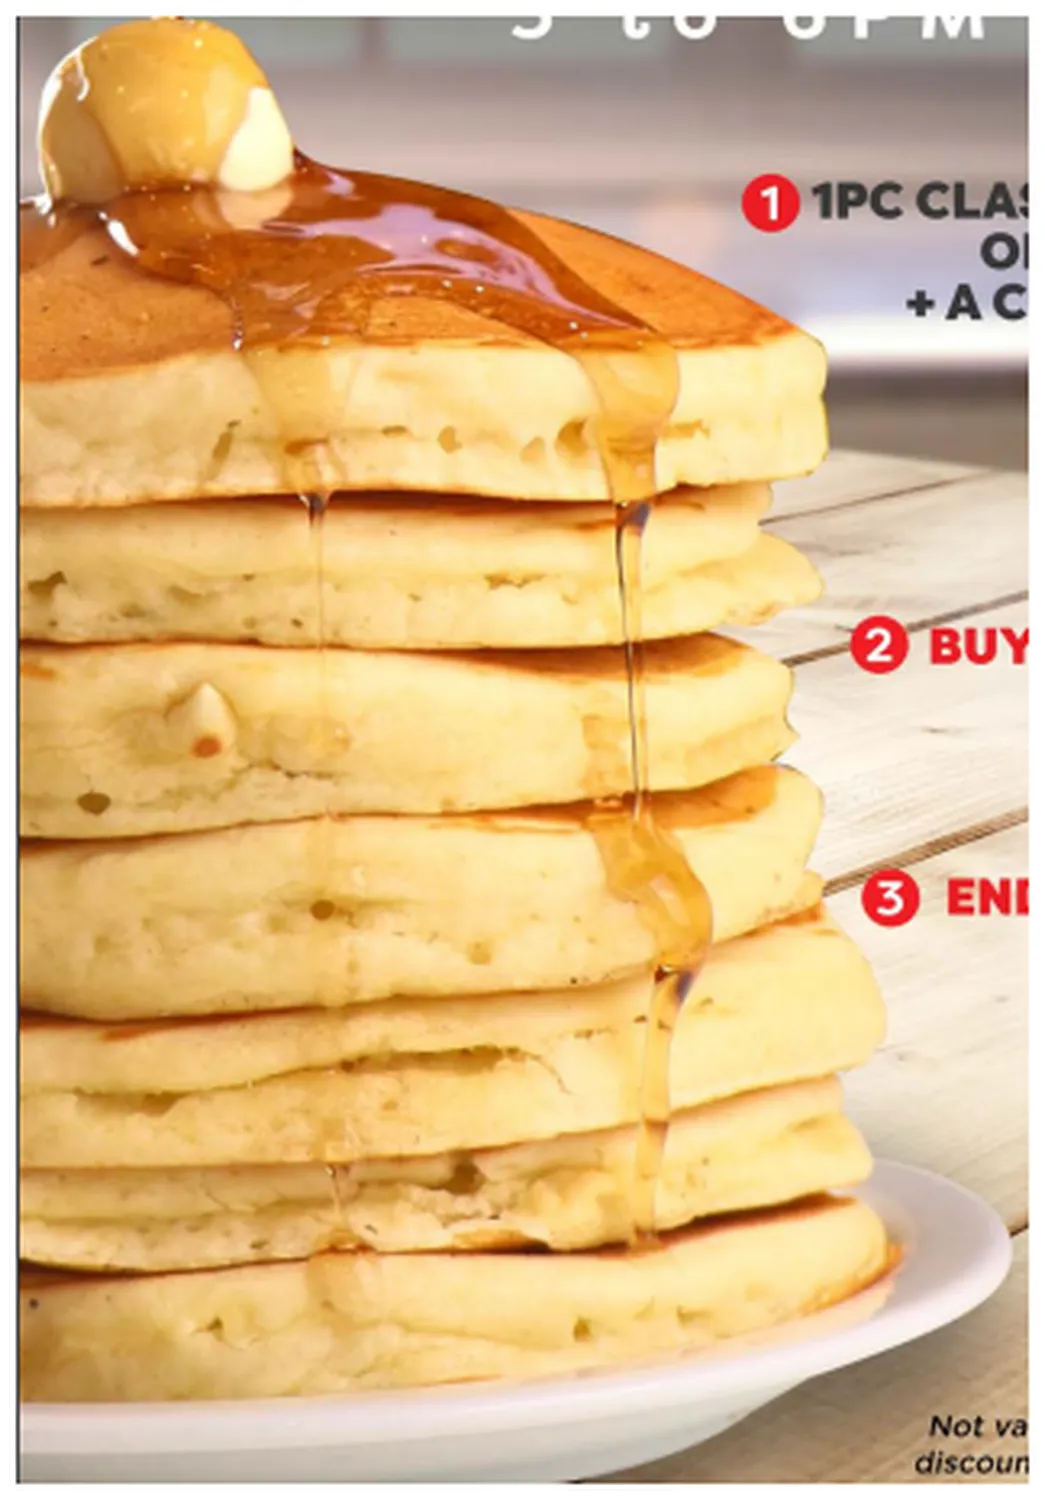 dennys menu philippine pancake hour